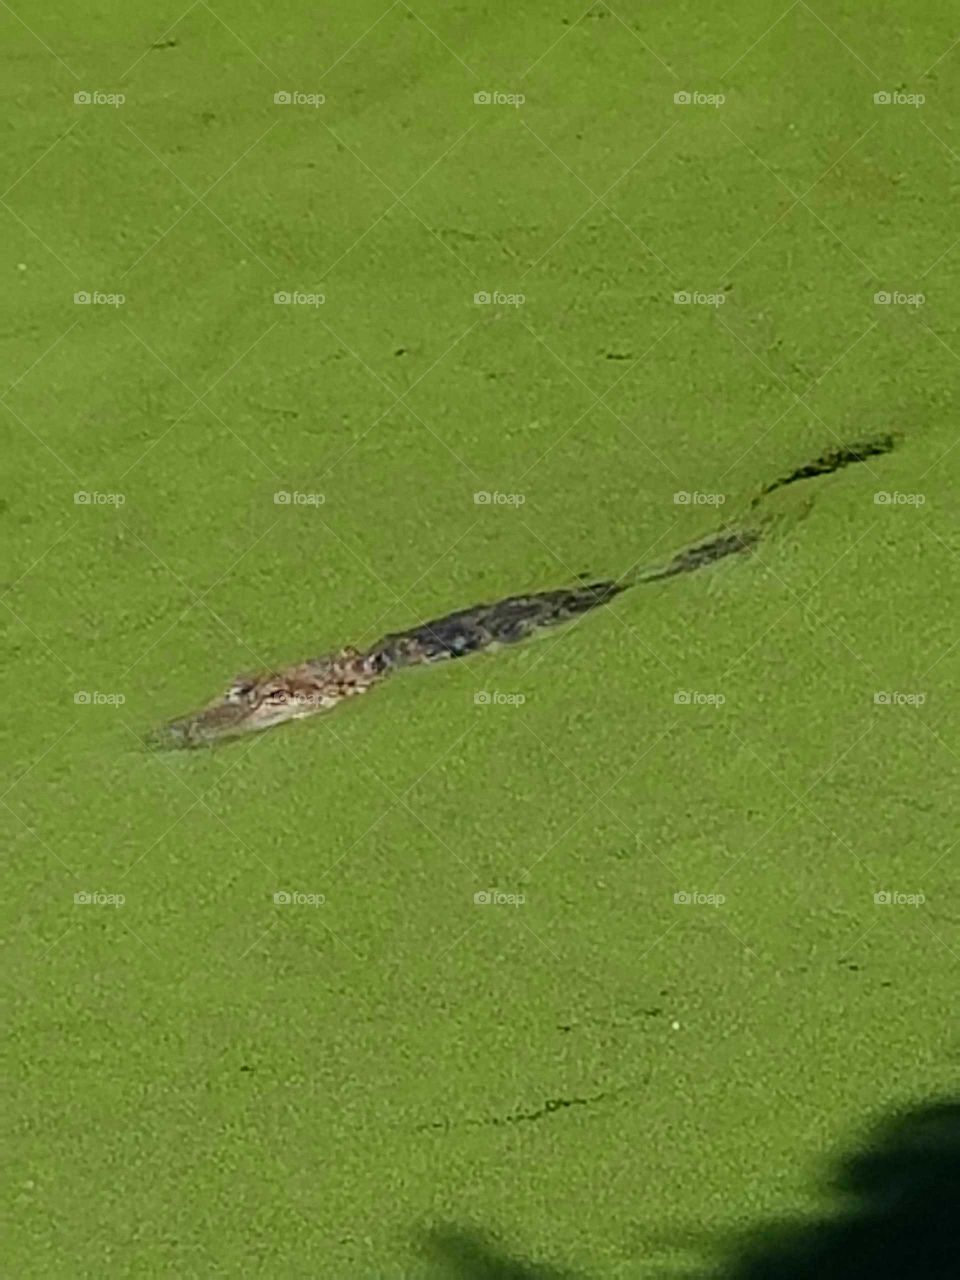 Alligator in swamp